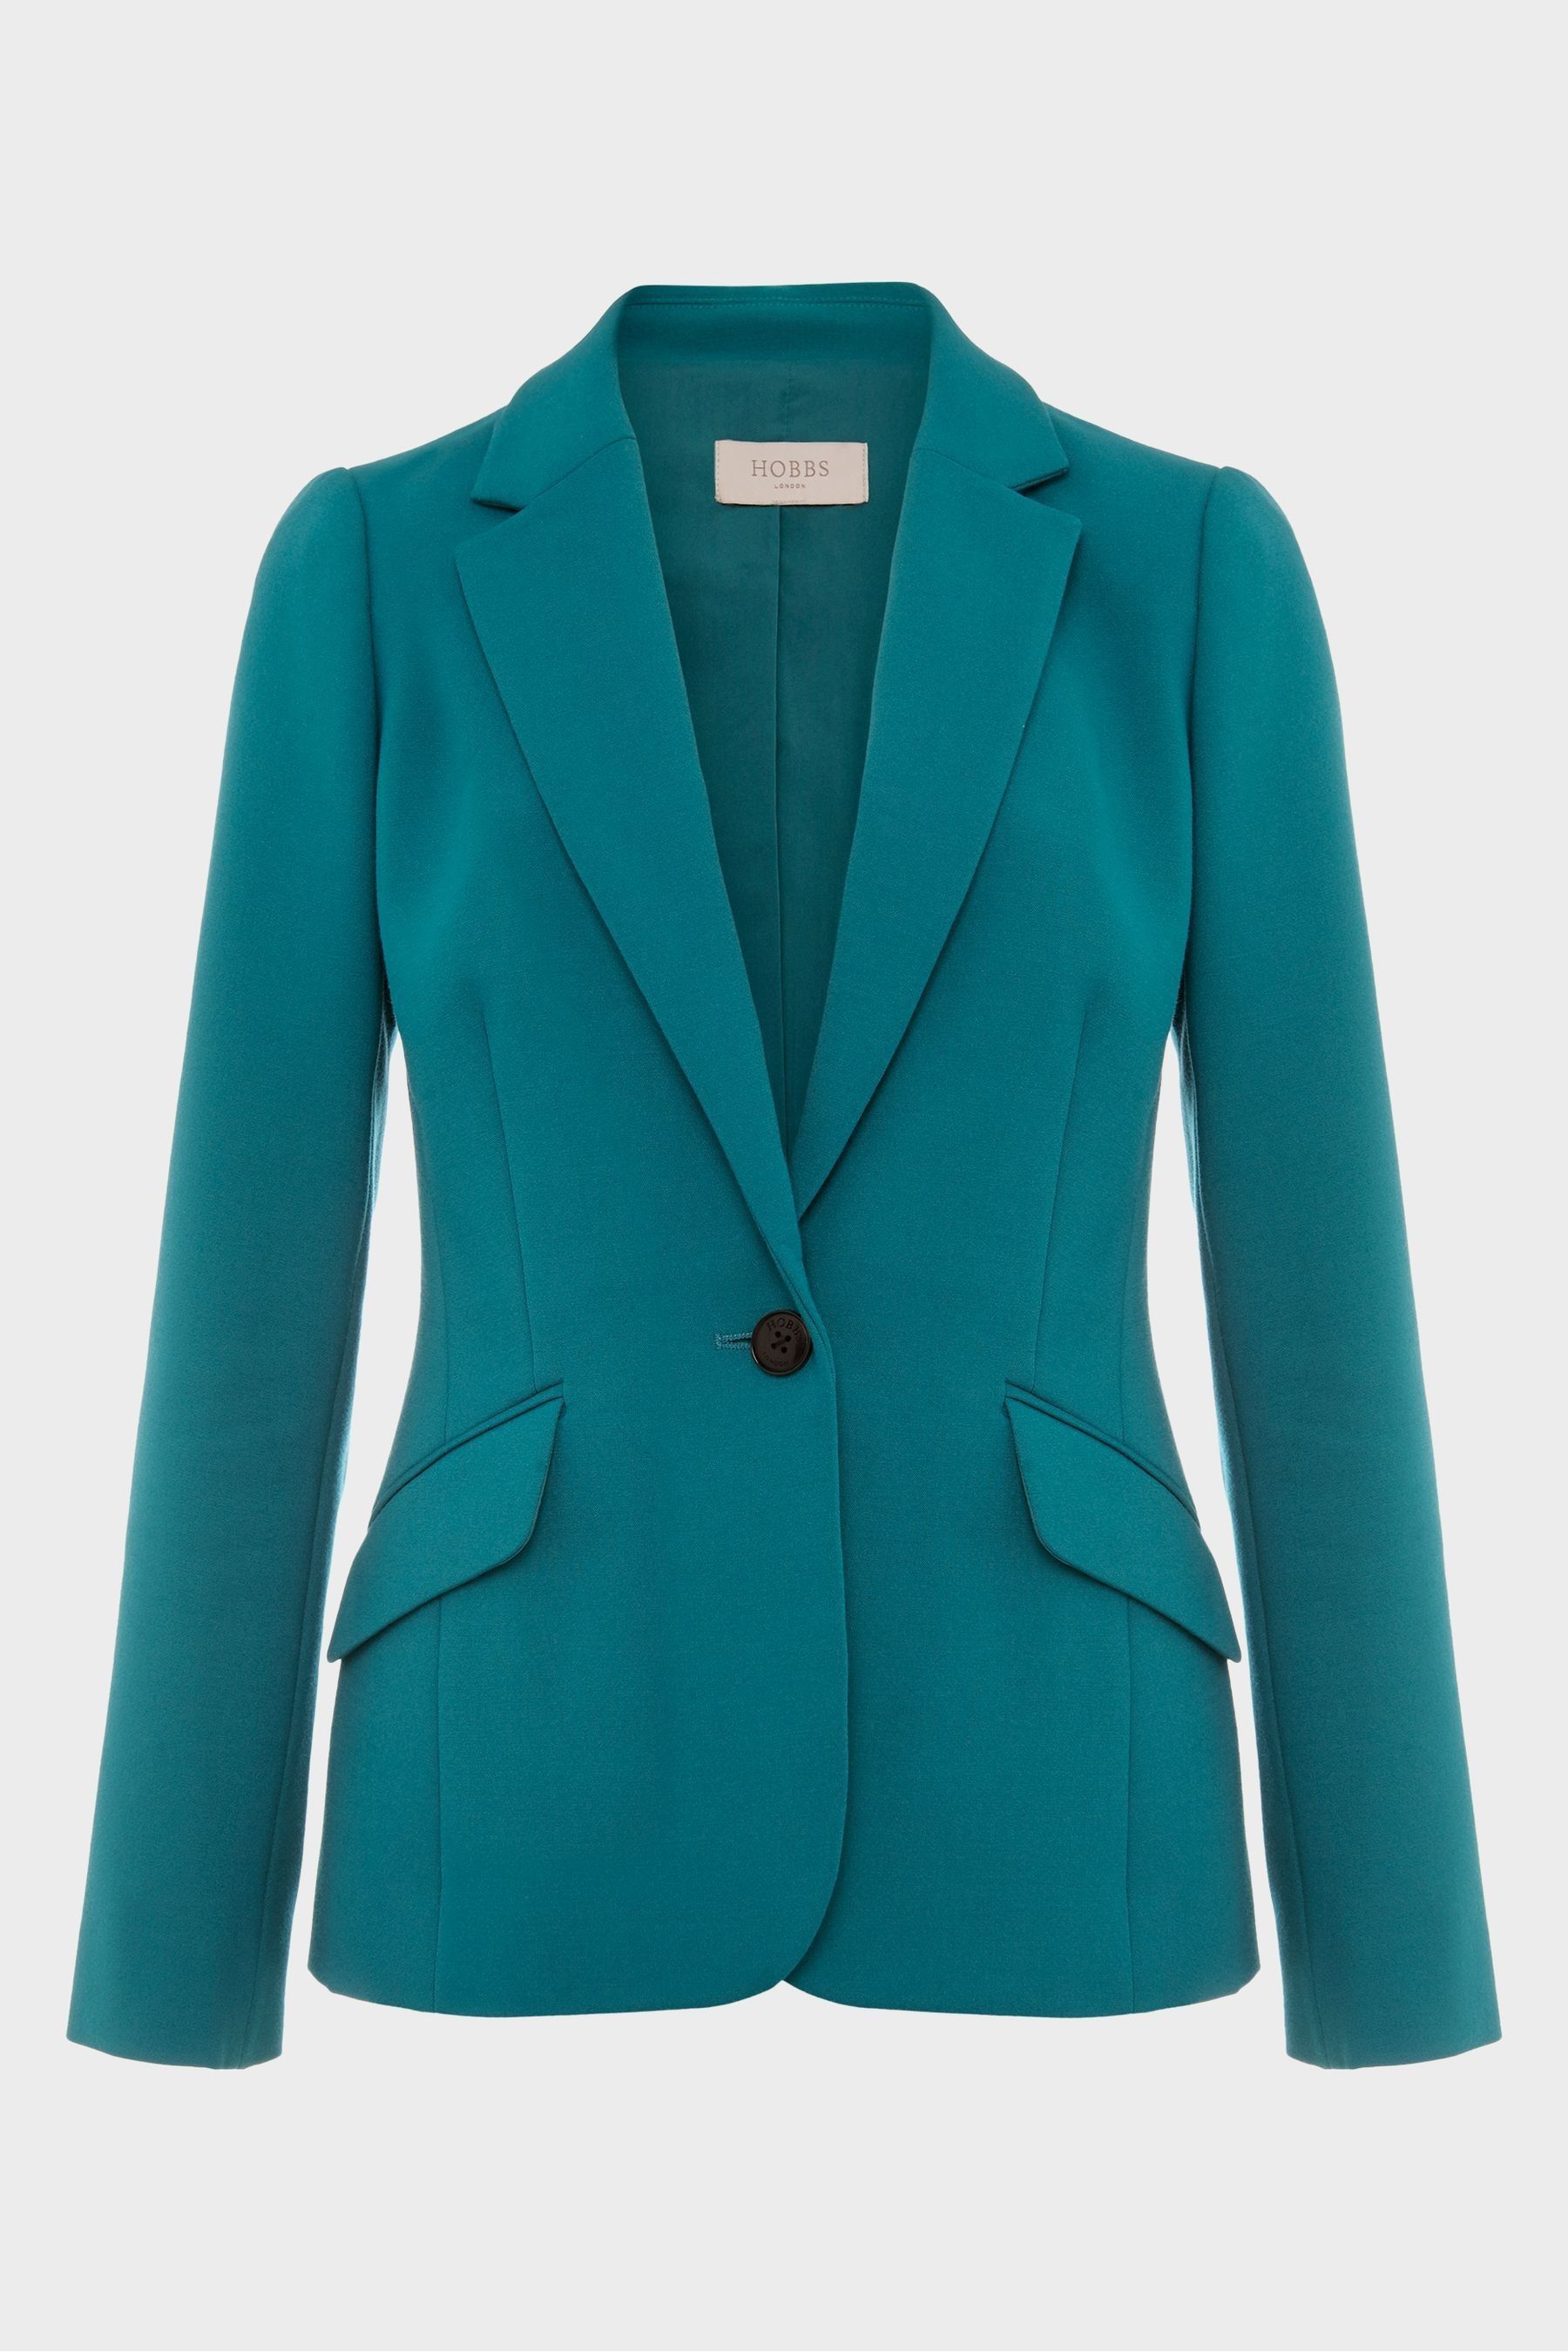 Buy Hobbs Blue Suki Jacket from the Next UK online shop